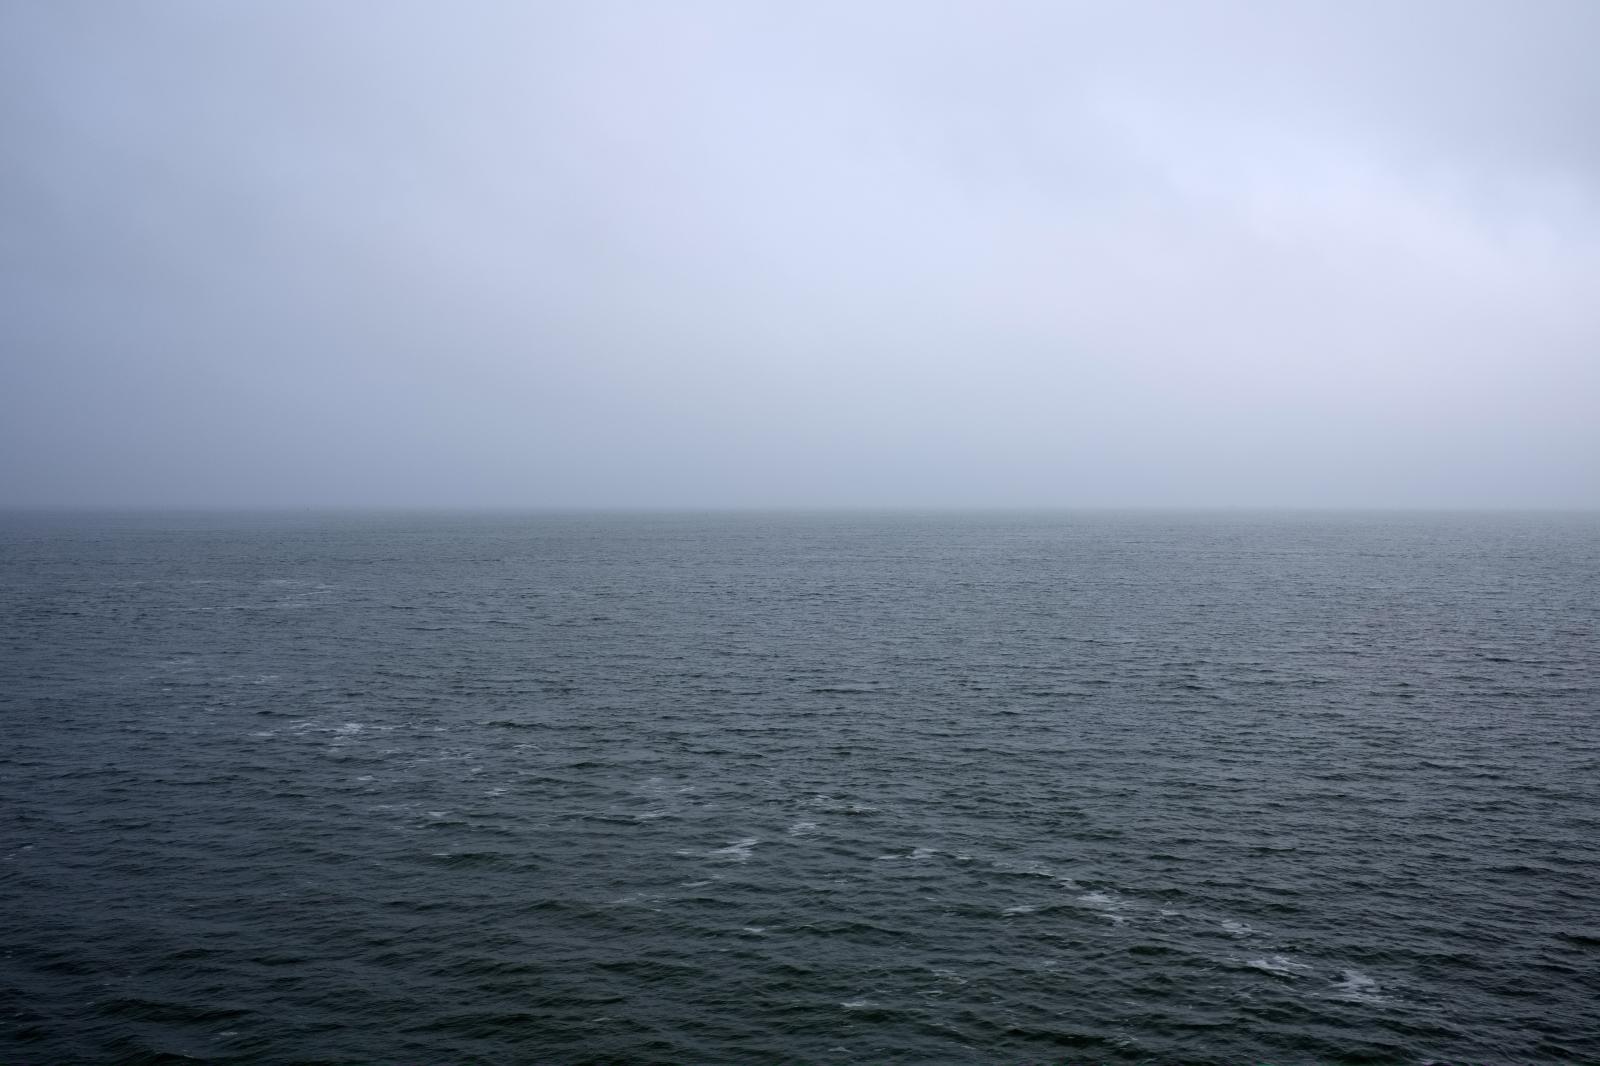 Wadden Sea | Buy this image